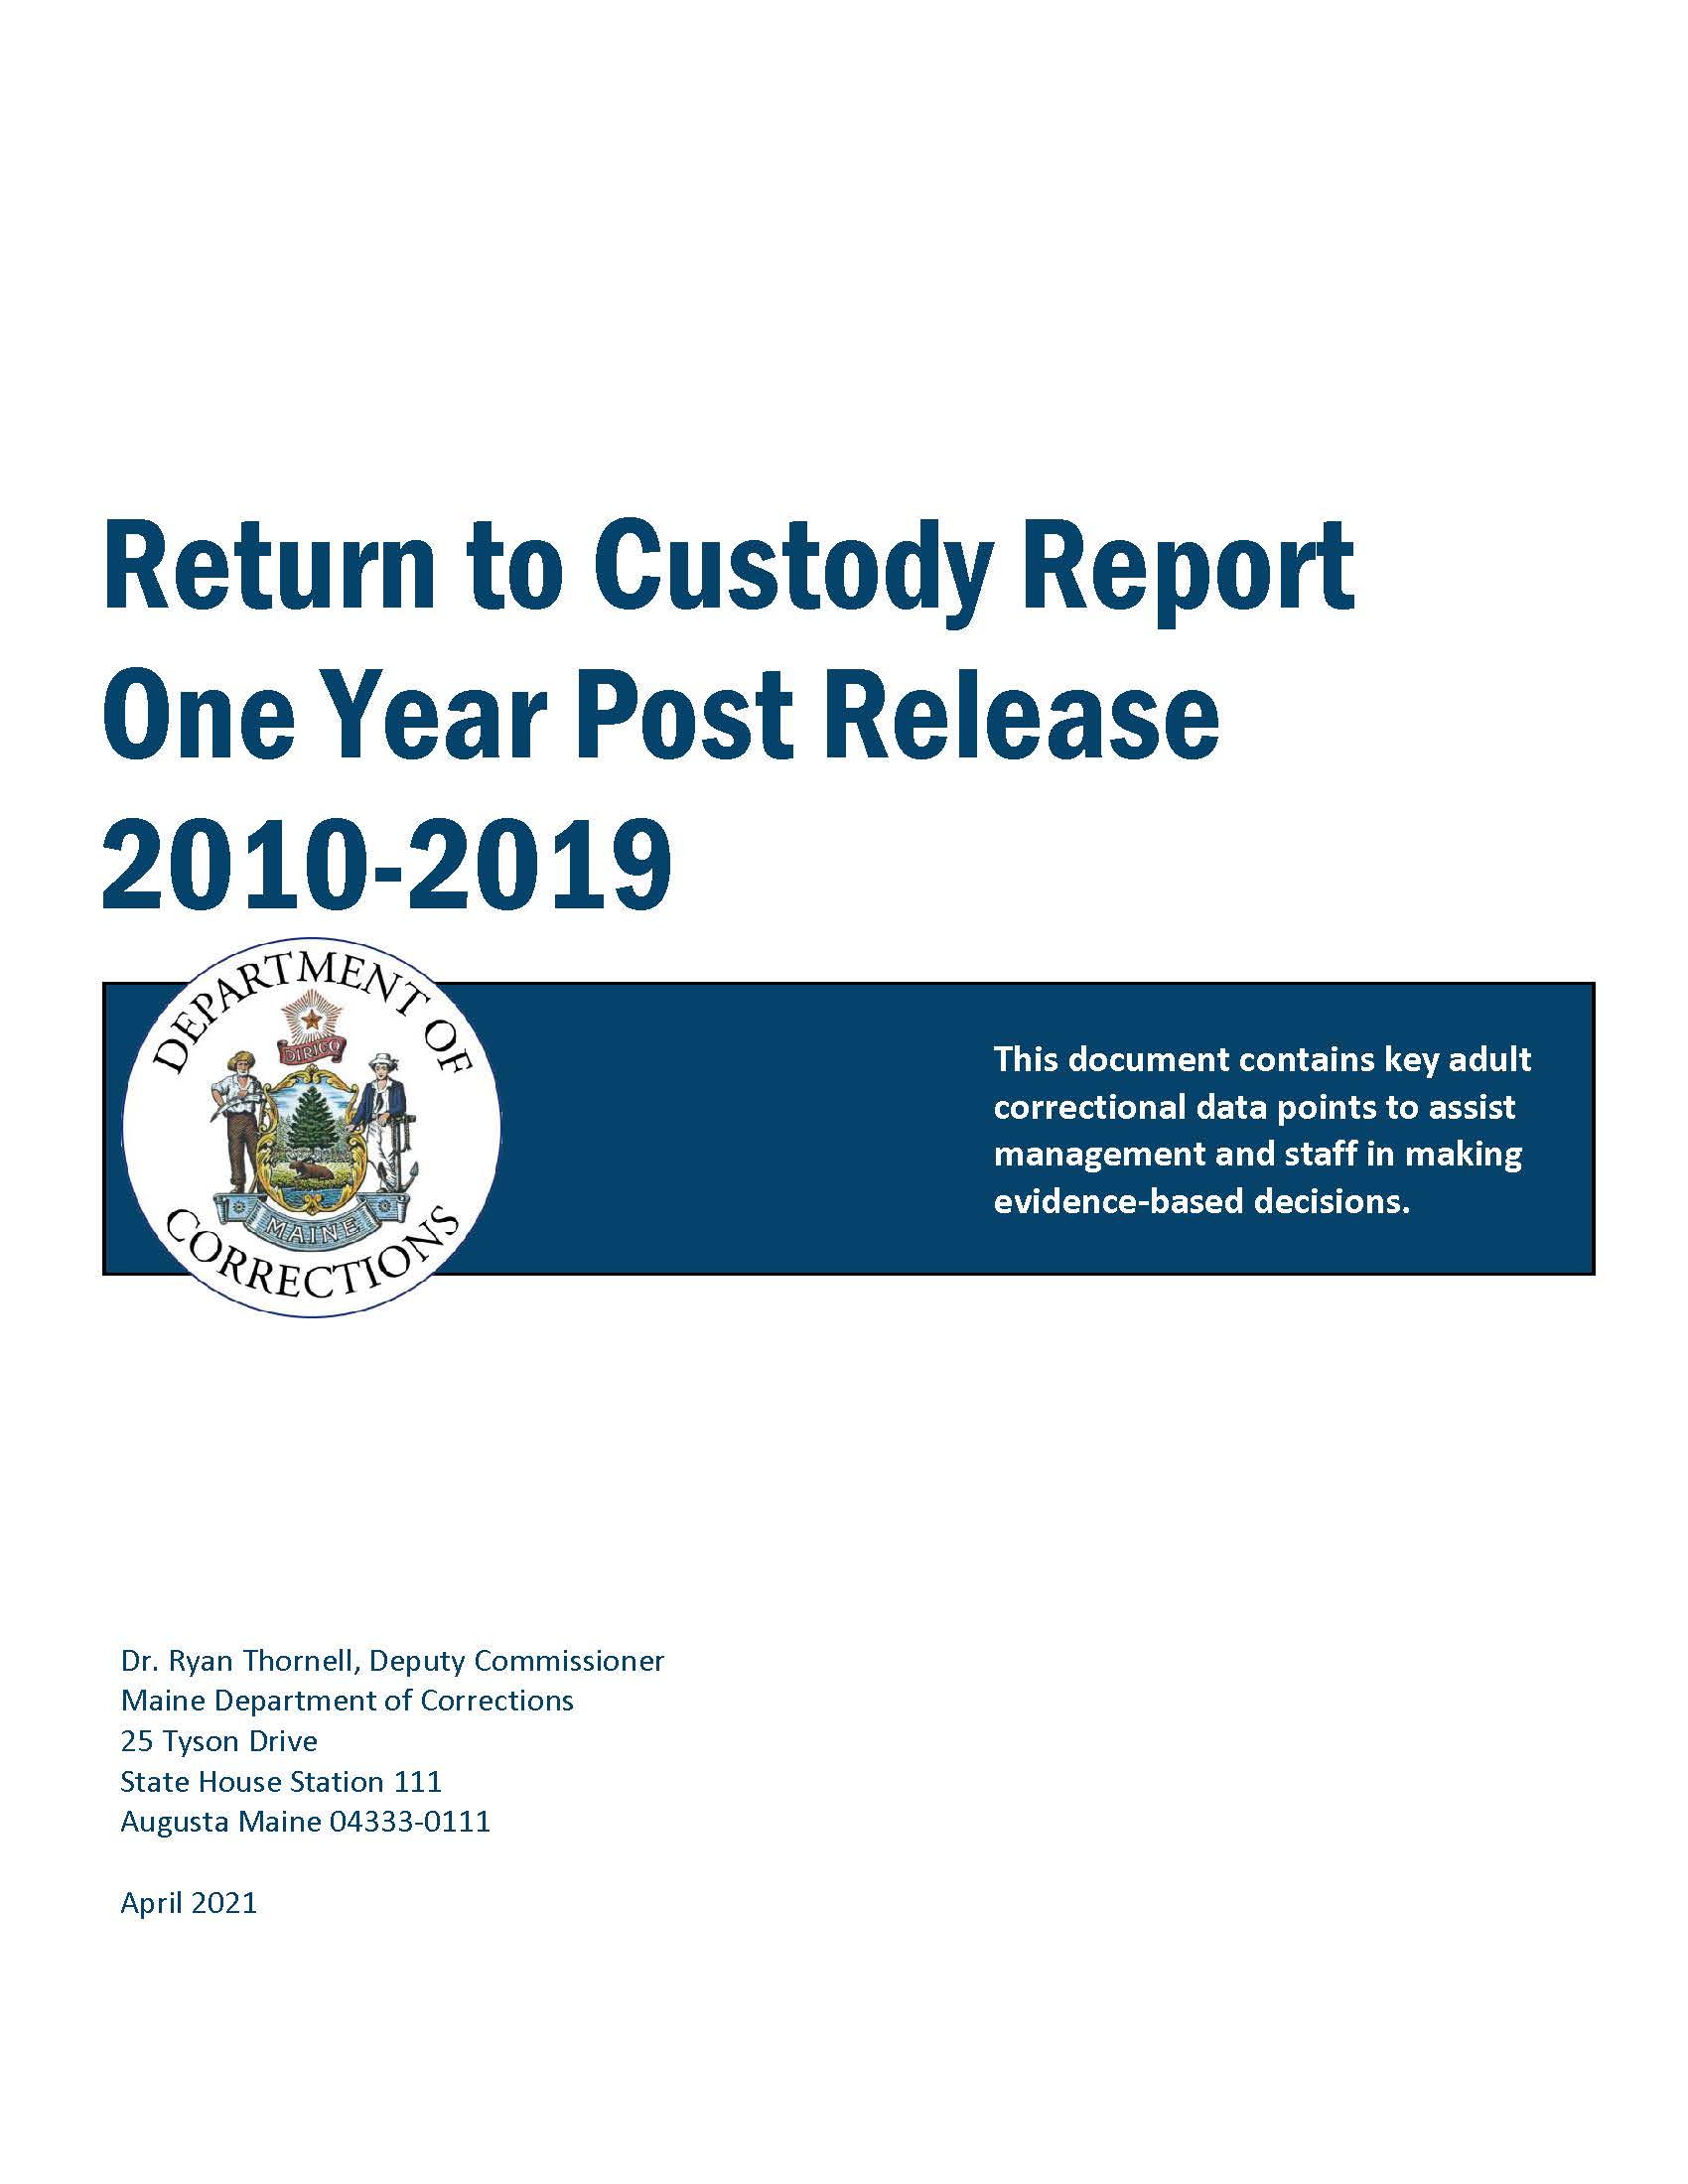 Return to Custody Report One Year Post Release 2010-2019